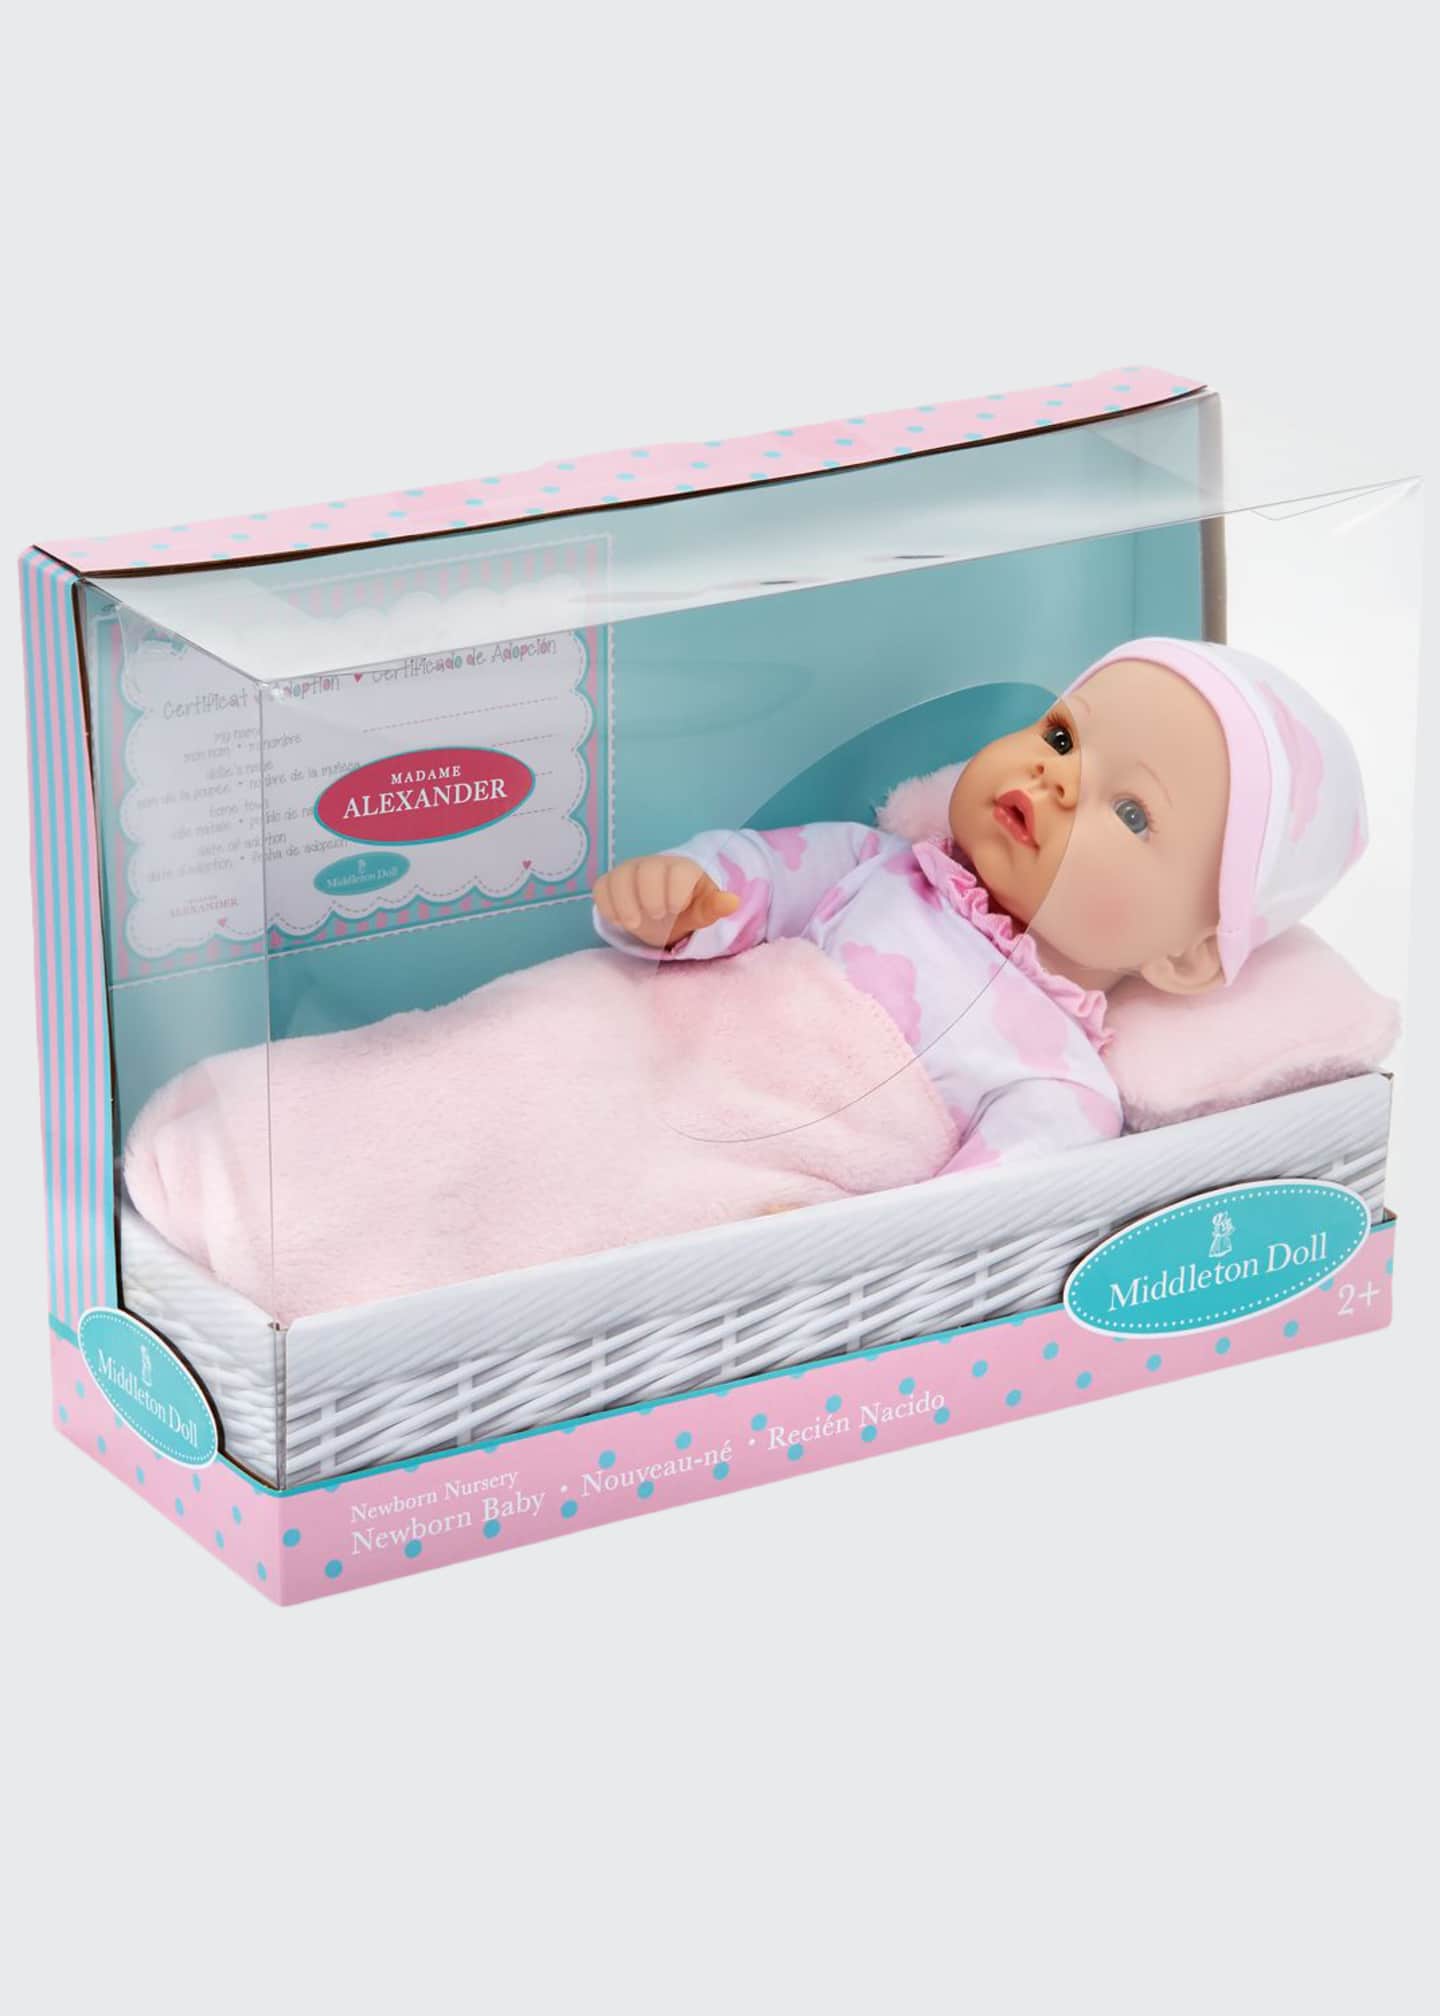 Madame Alexander Middleton Doll Essentials Newborn Nursery Baby Teal Pink 16 in for sale online 